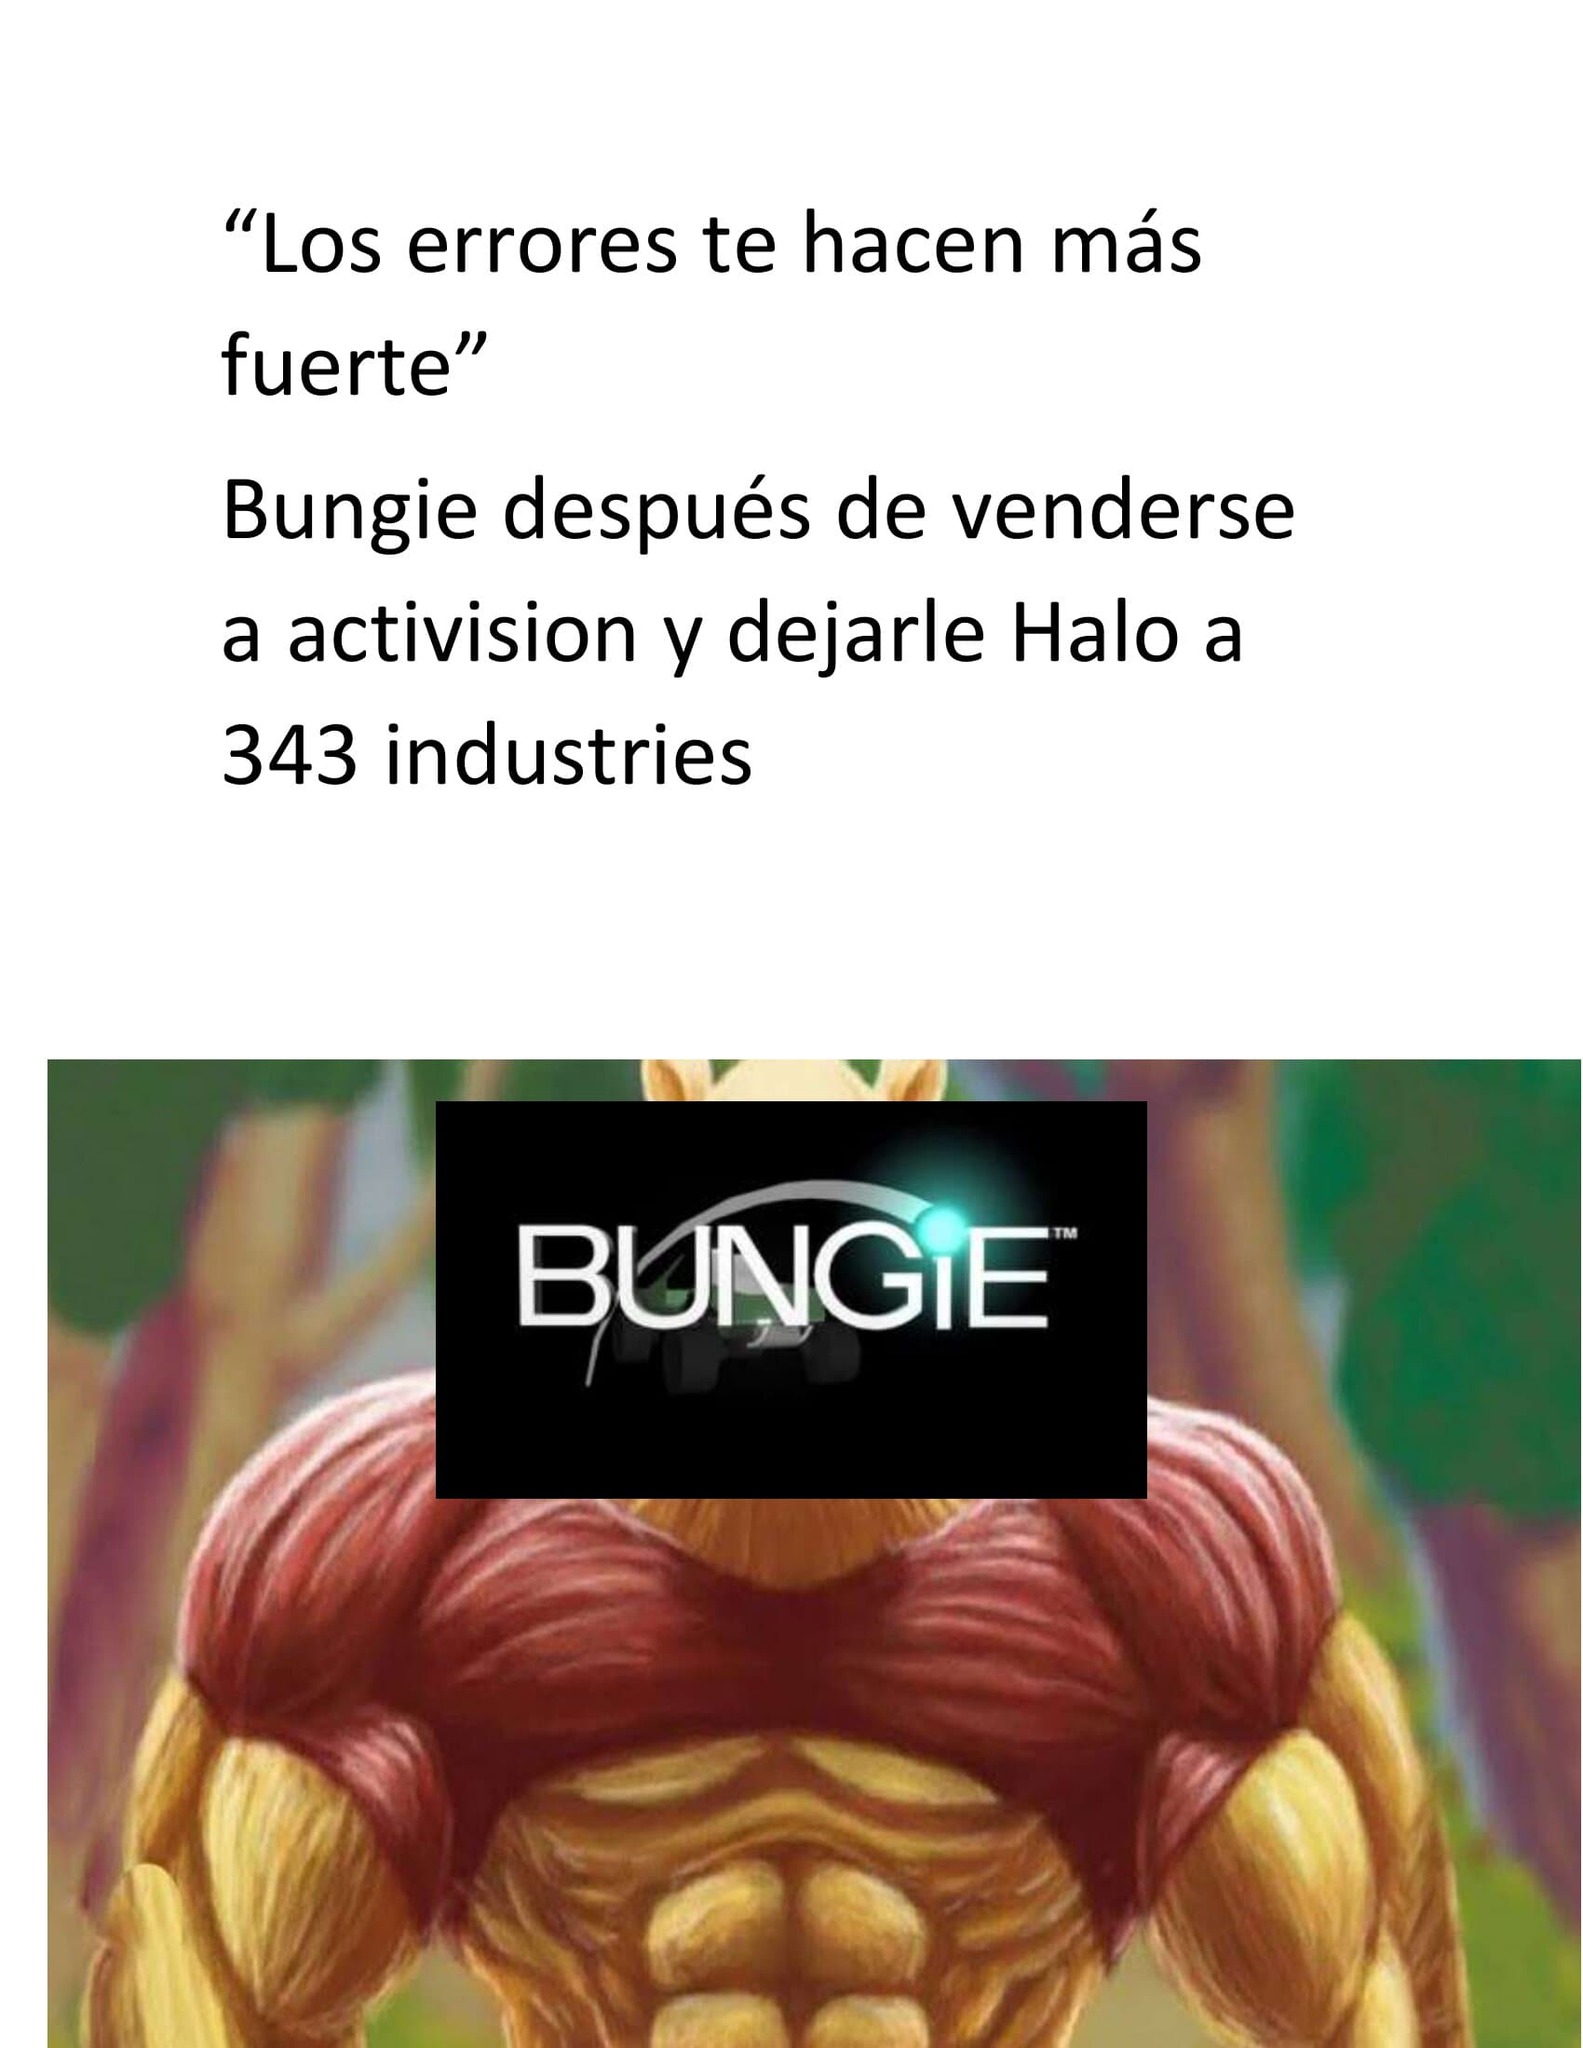 Bungie - meme